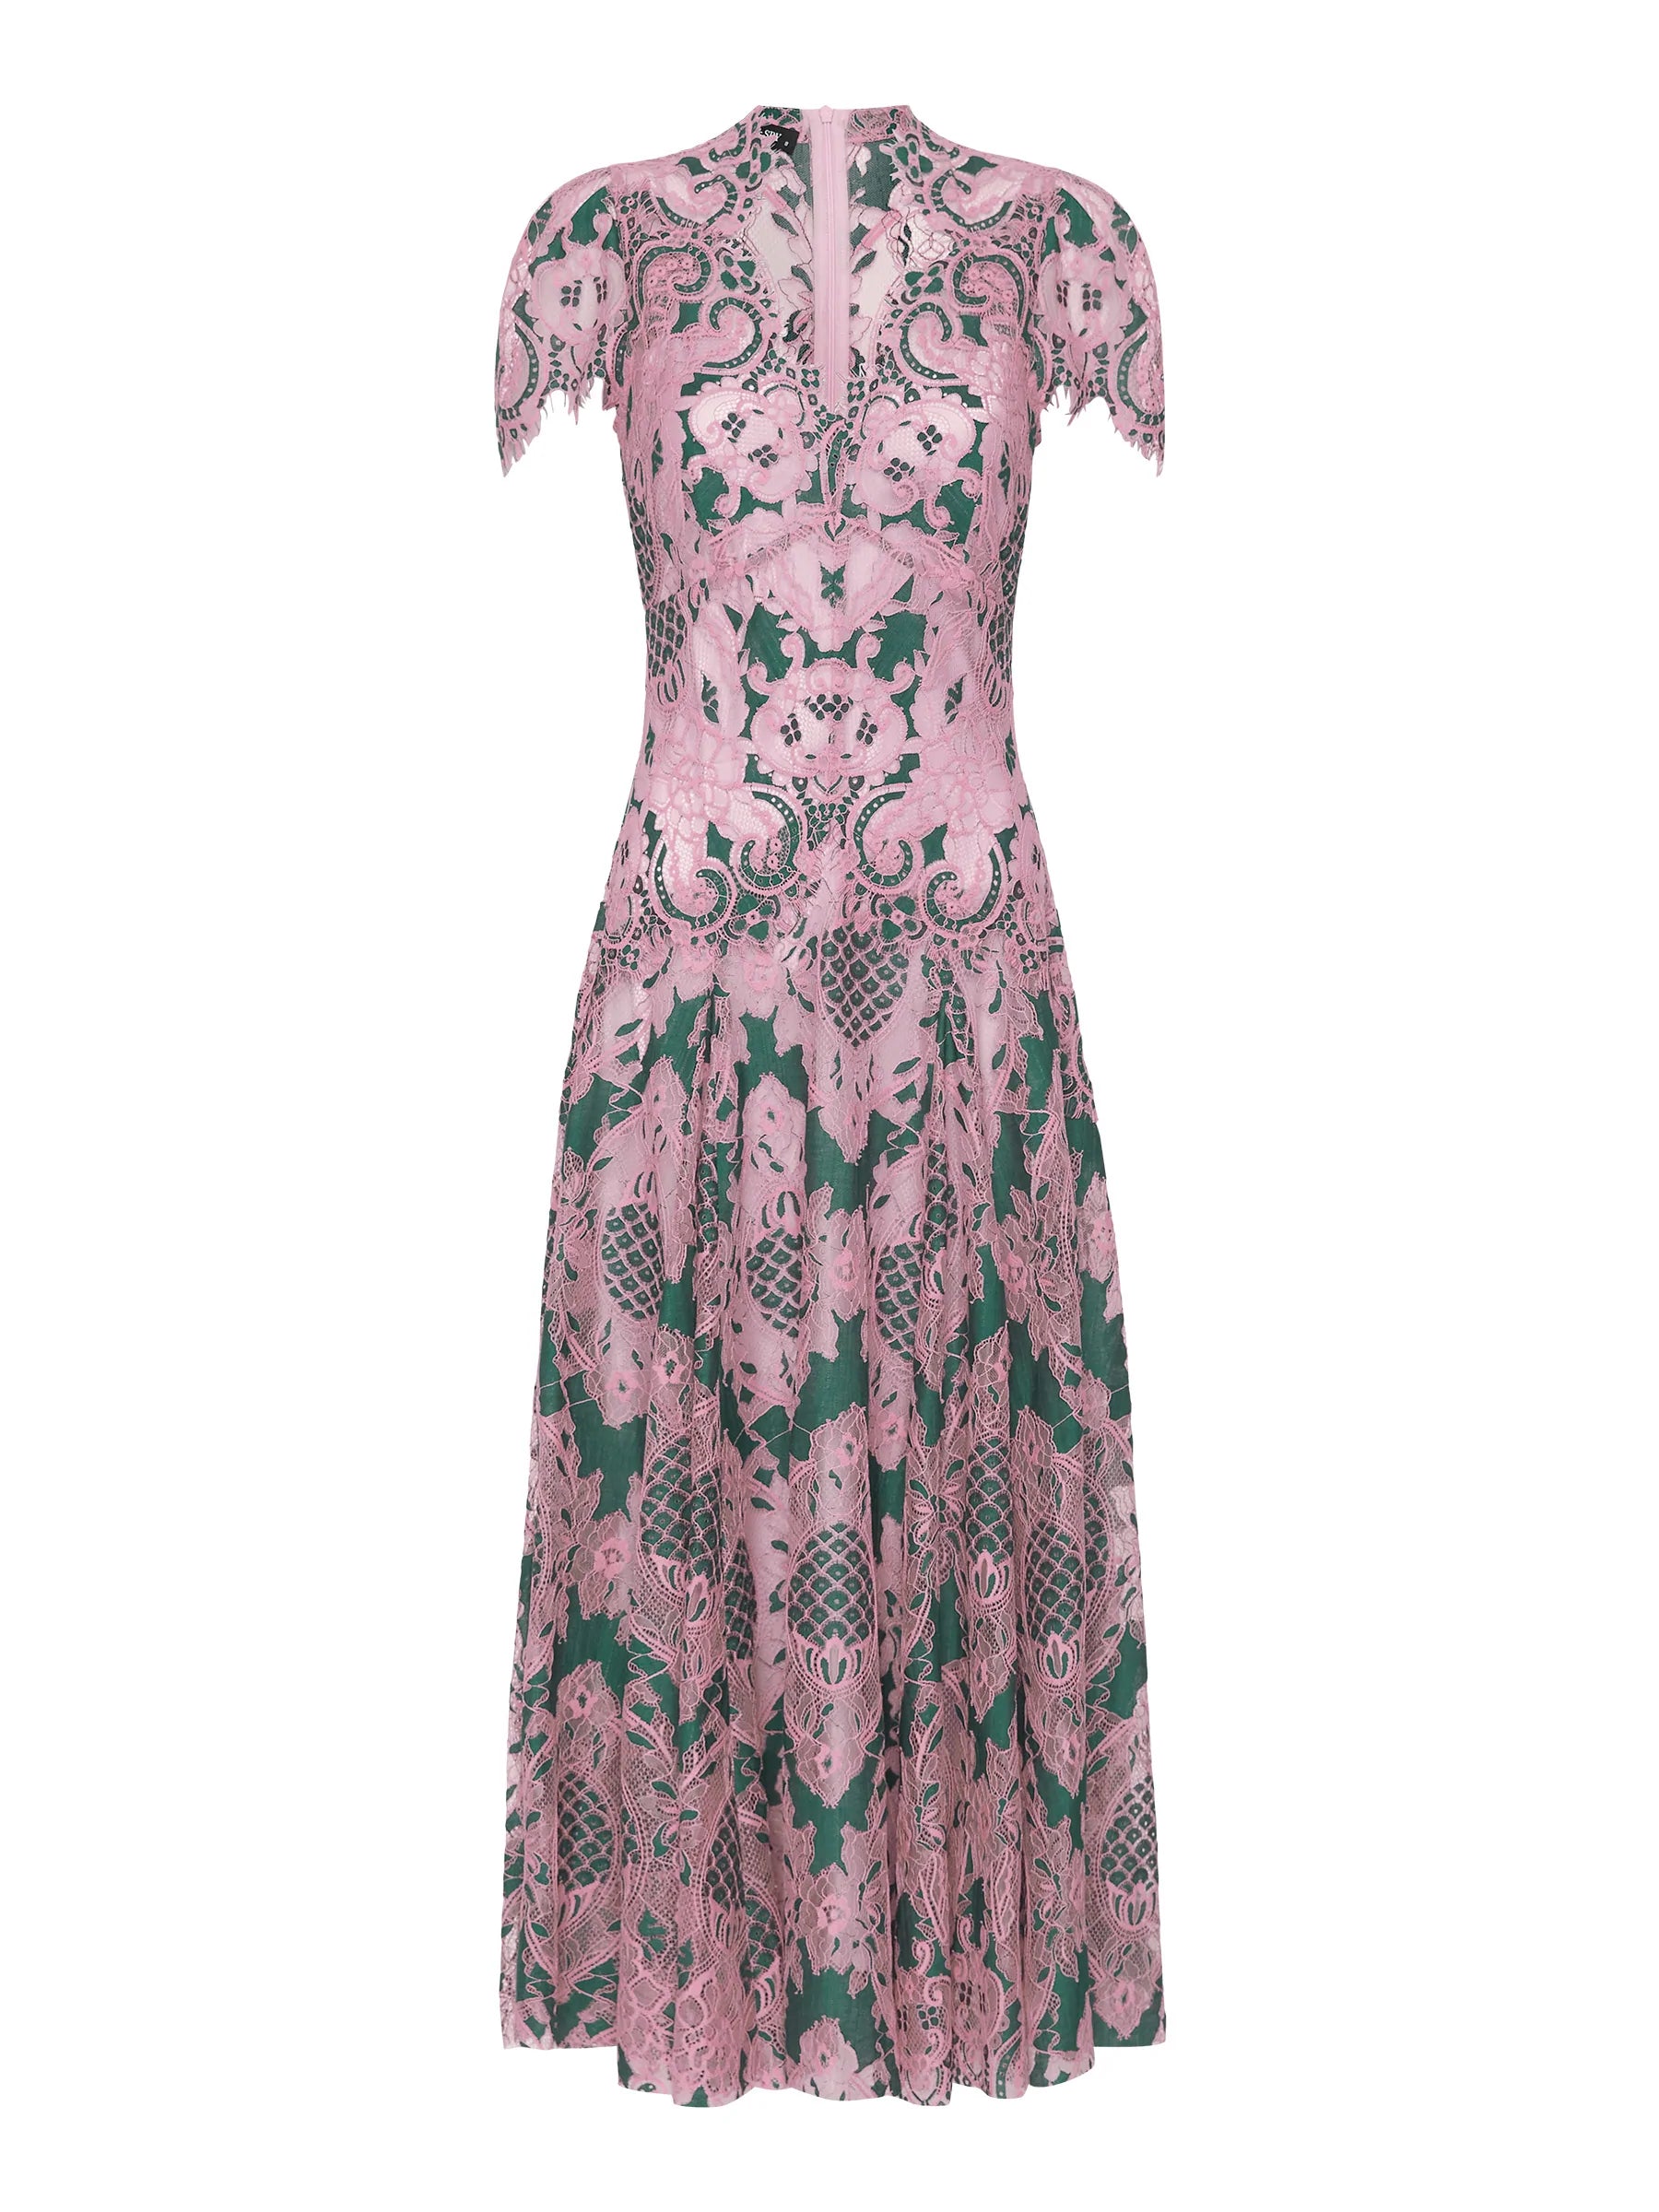 Moss& Spy Sienna Cap Sleeve Dress - Pink/Emerald